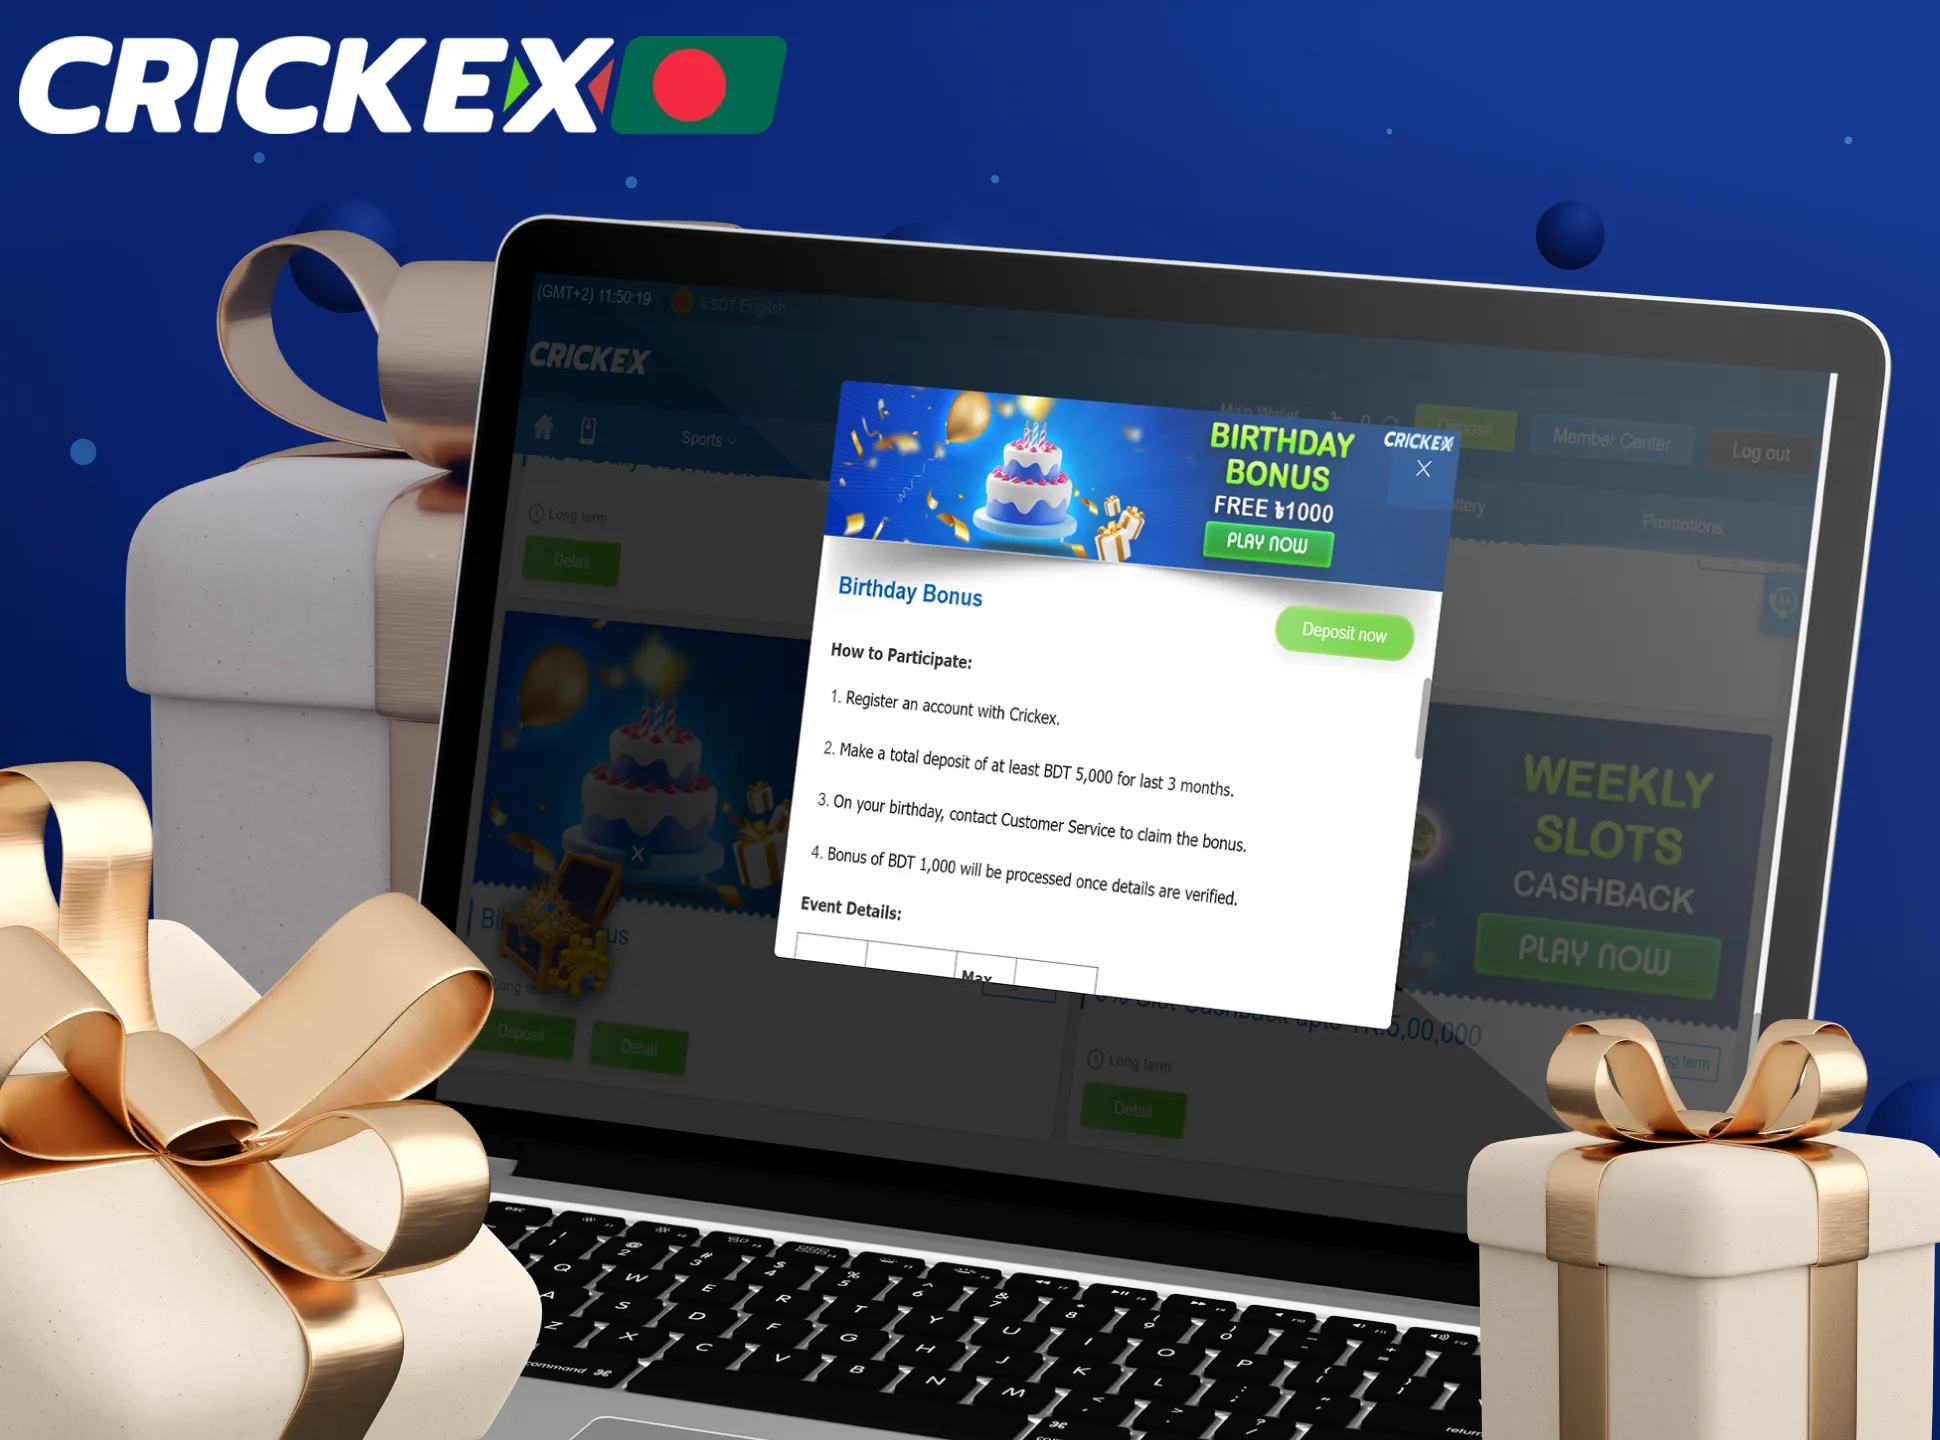 Claim your Crickex birthday bonus by betting on tennis matches.